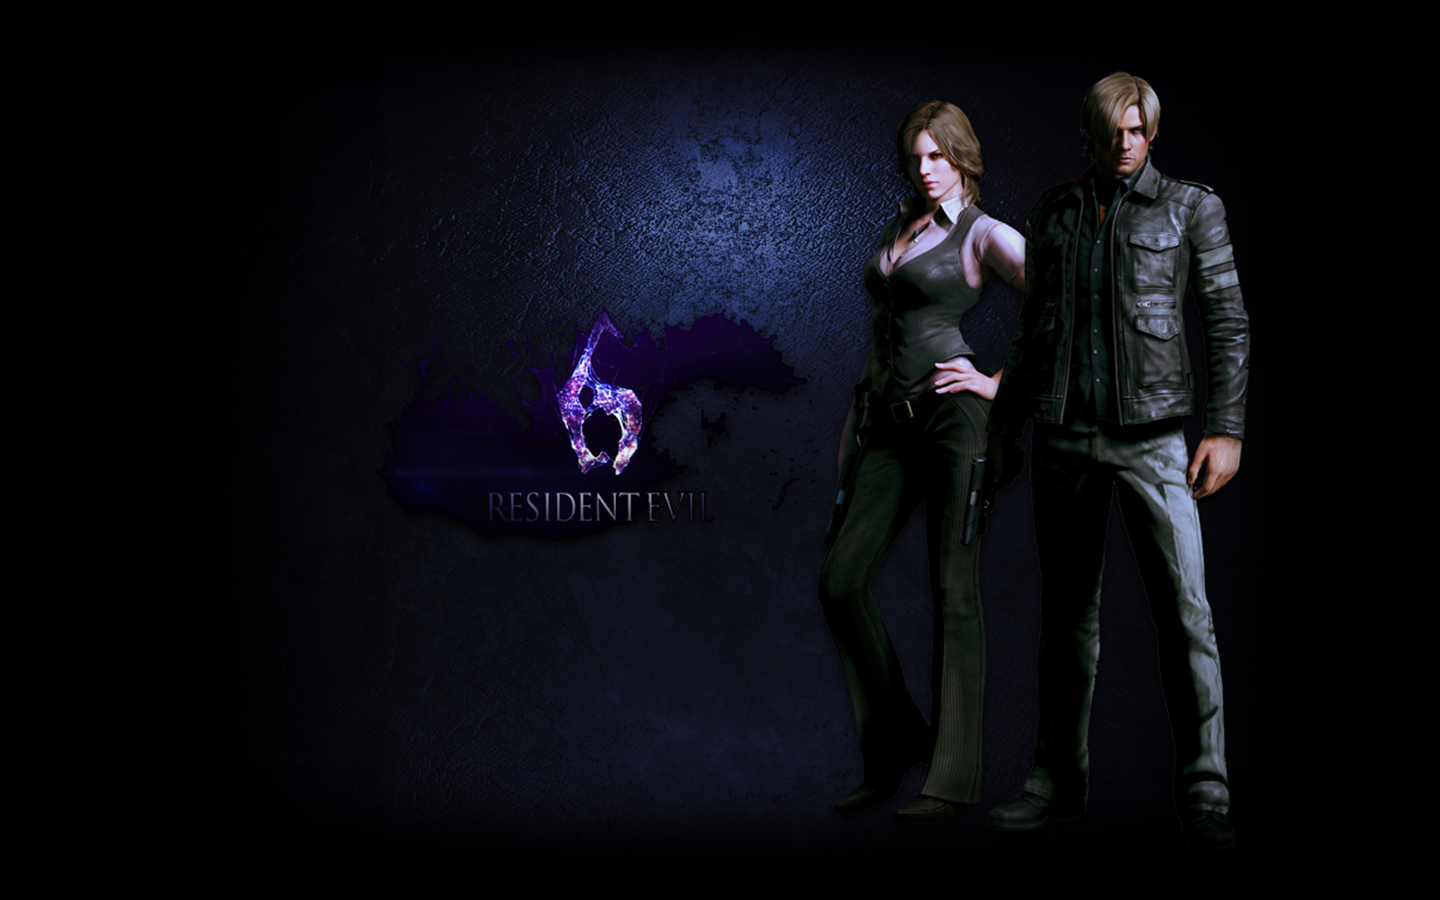 Resident Evil Wallpaper By Pvlimota